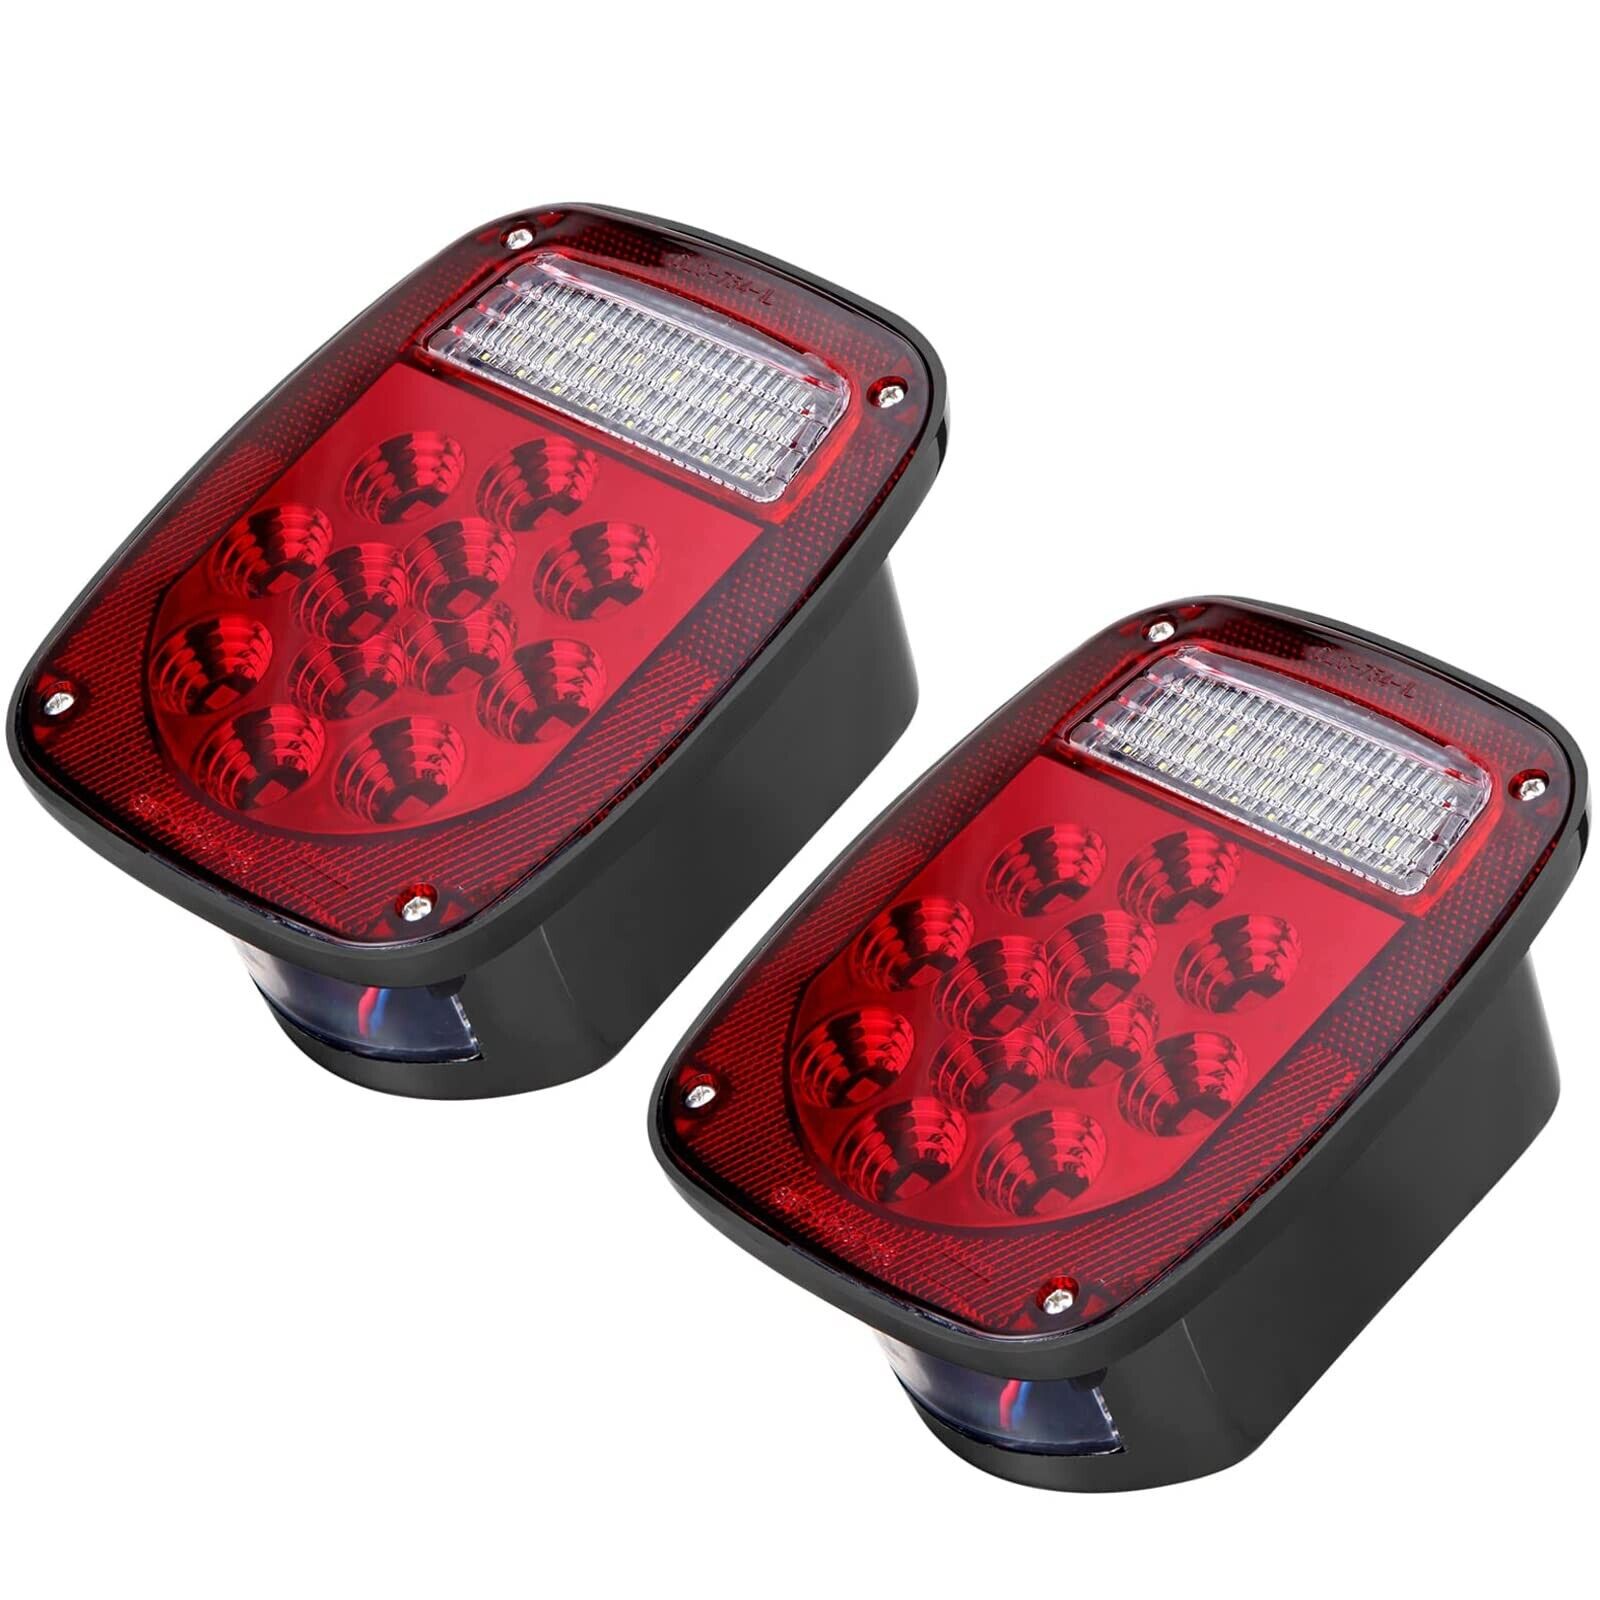 LIMICAR RV Tail Lights, 39 LED Trailer Lights, Red/White Dual Colors Universa...